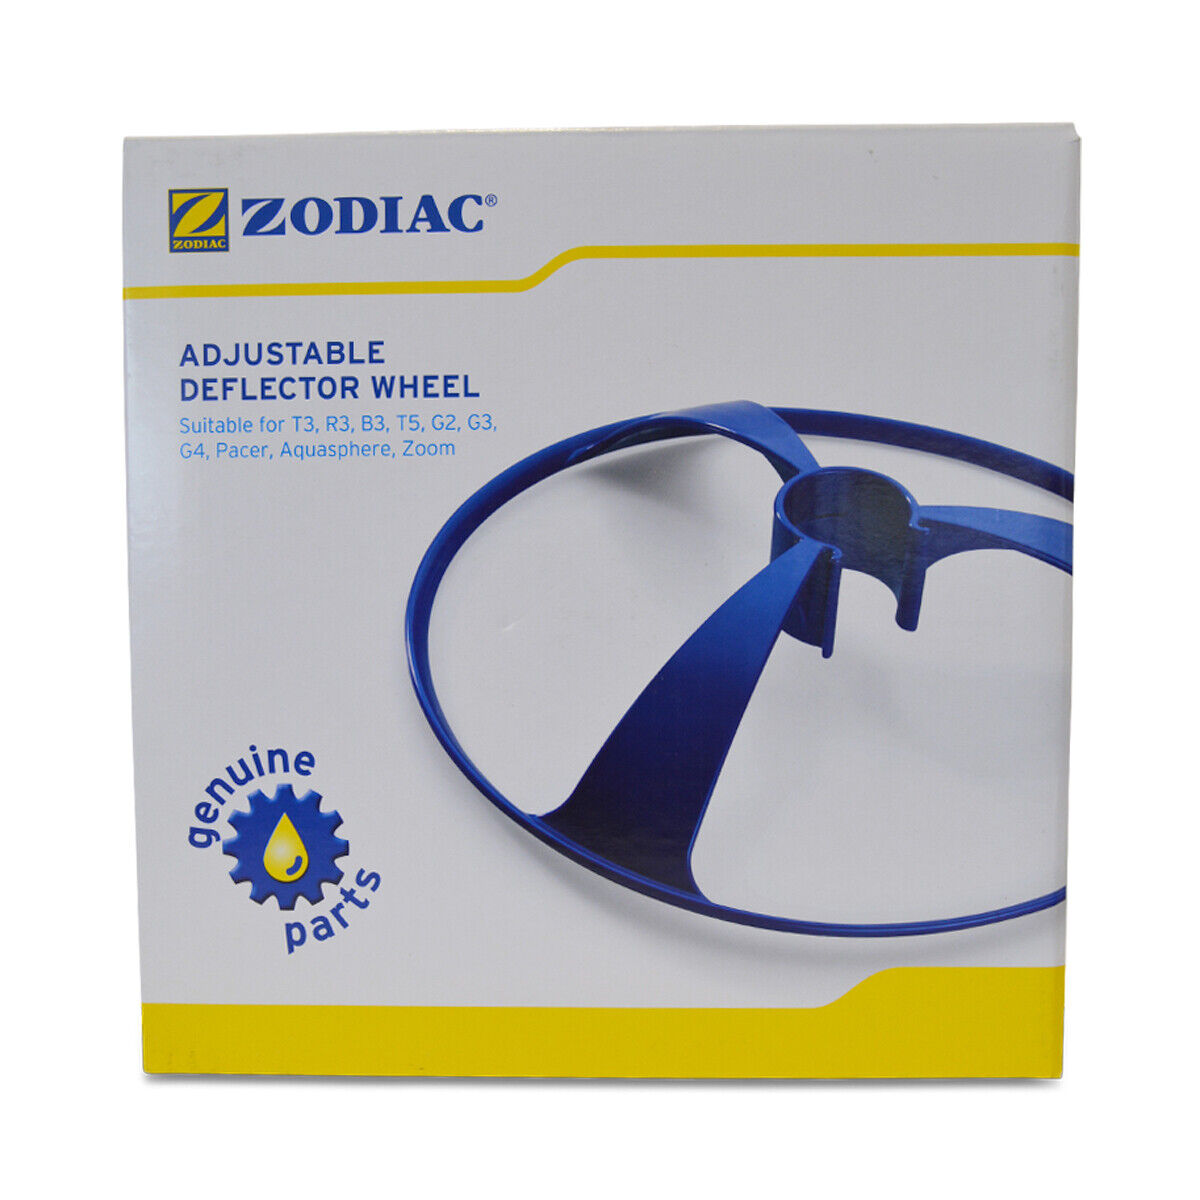 Zodiac Adjustable Deflector Wheel